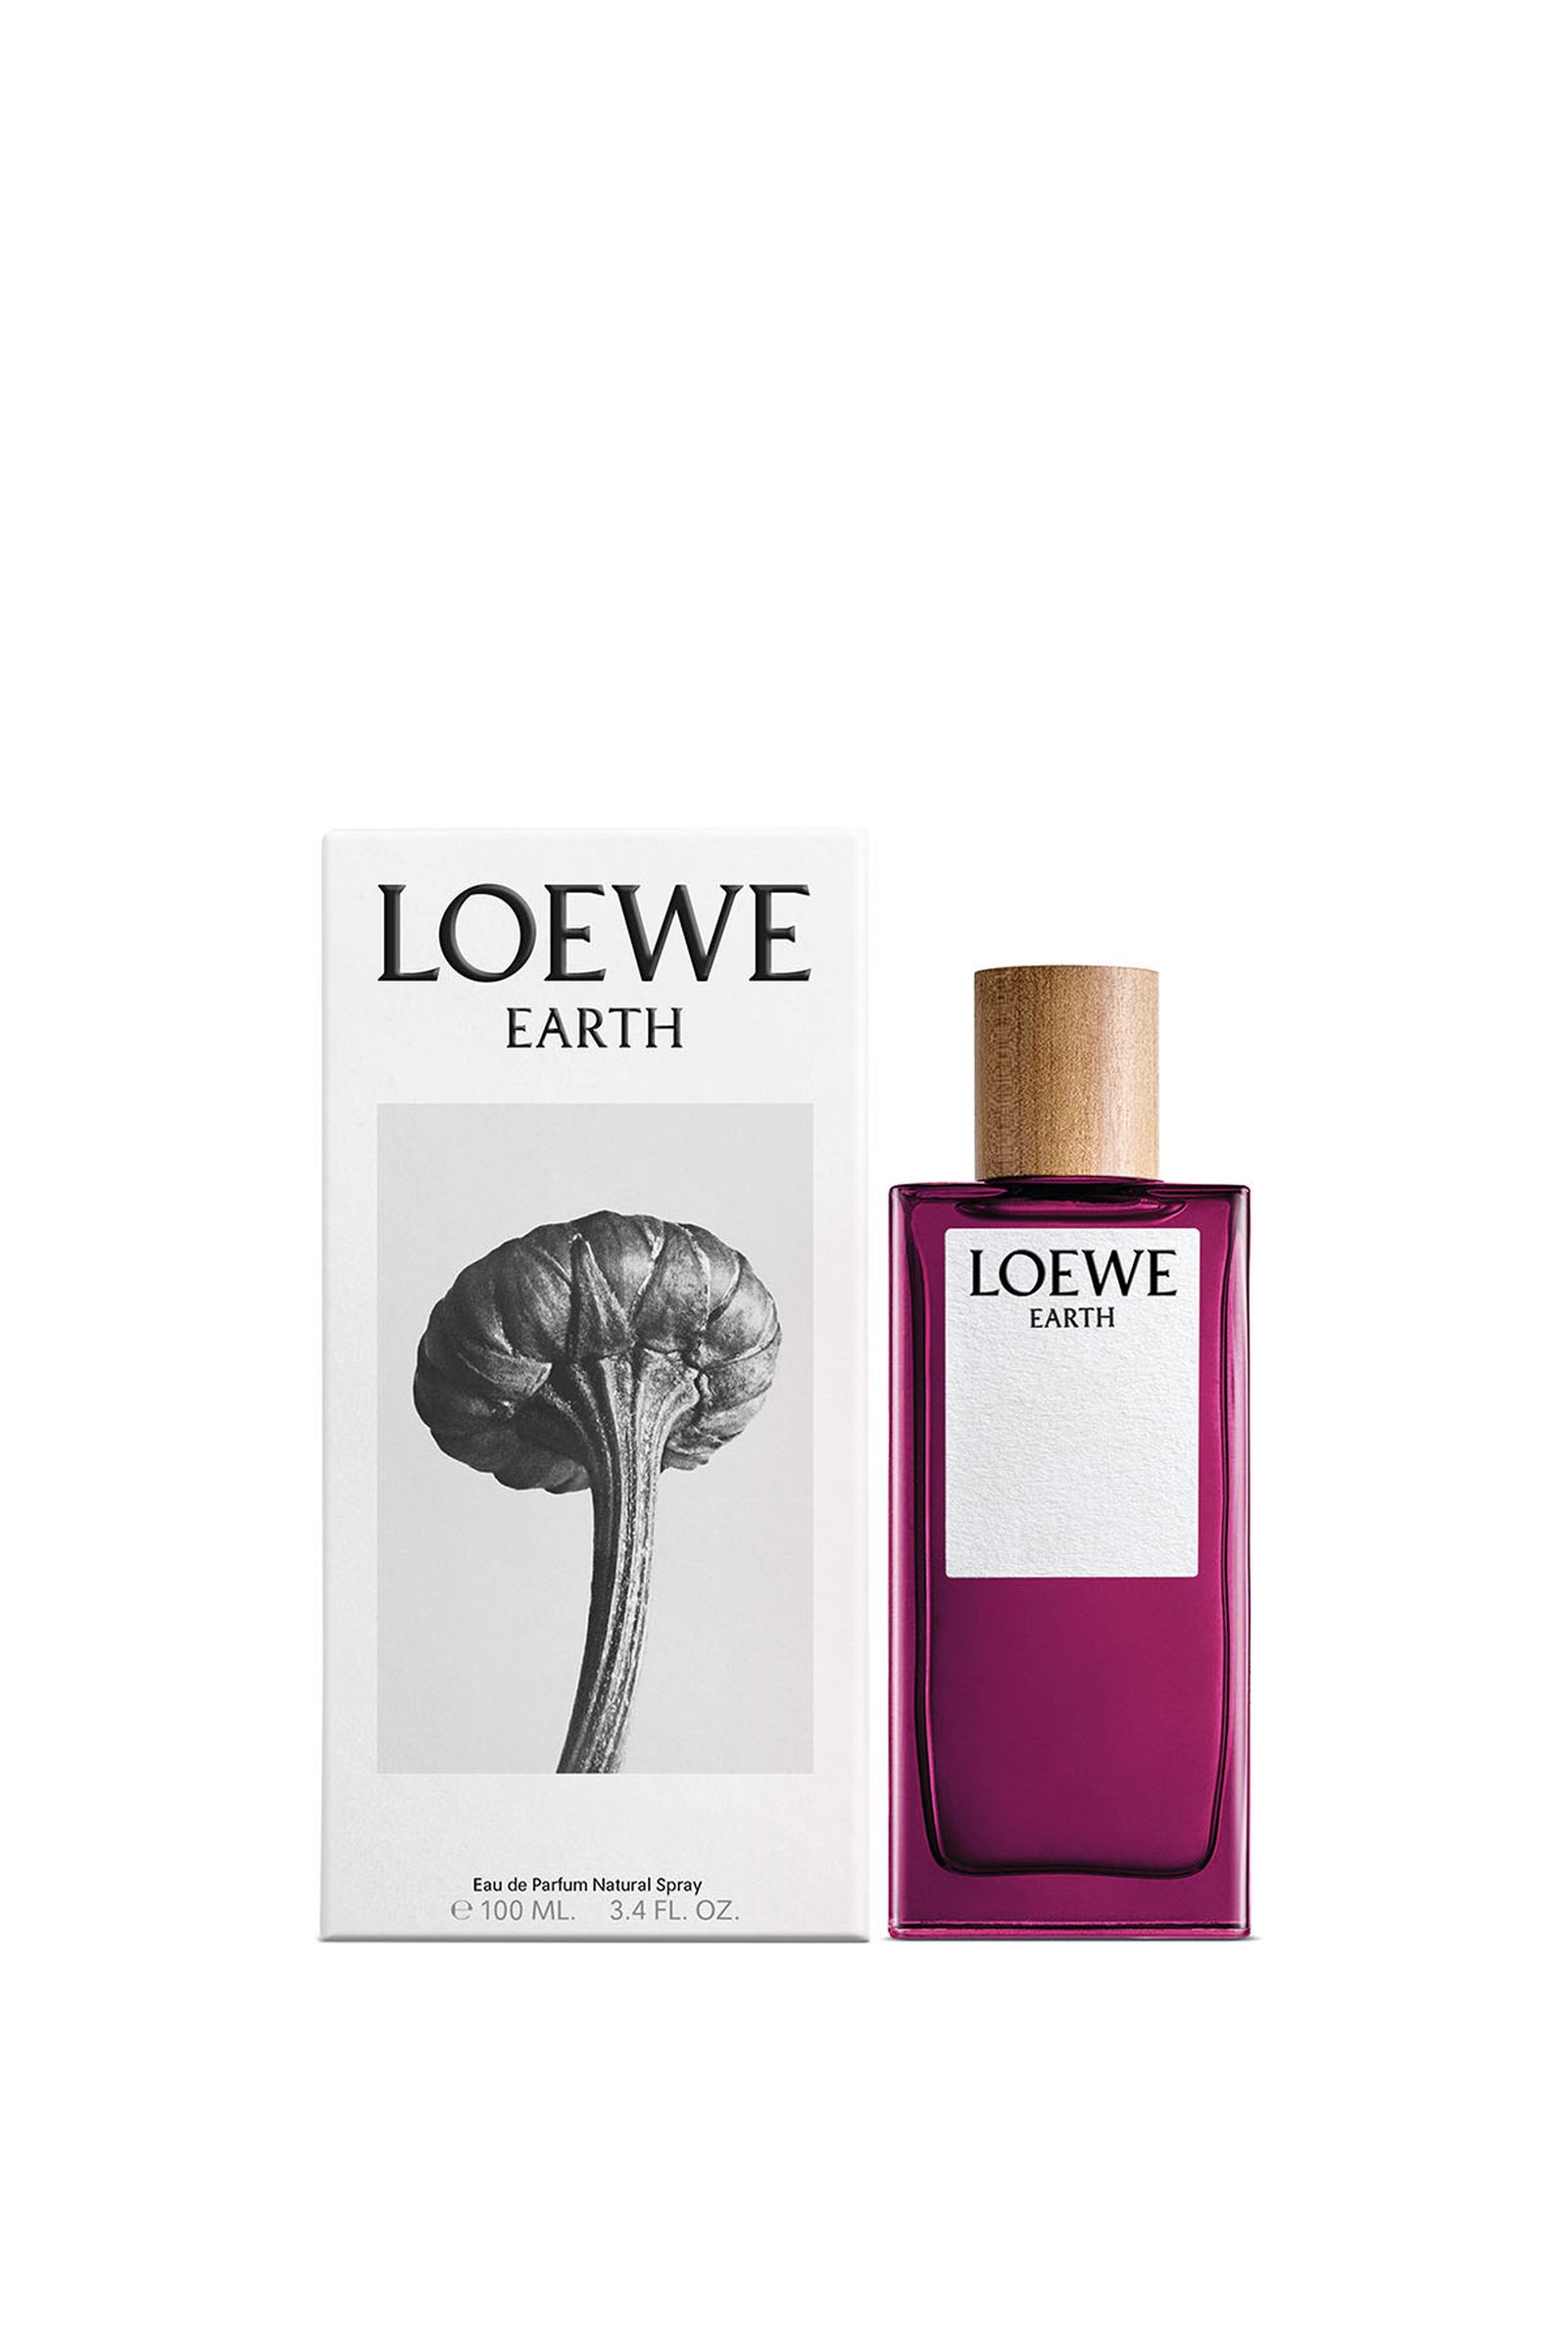 loewe-earth-perfume-2